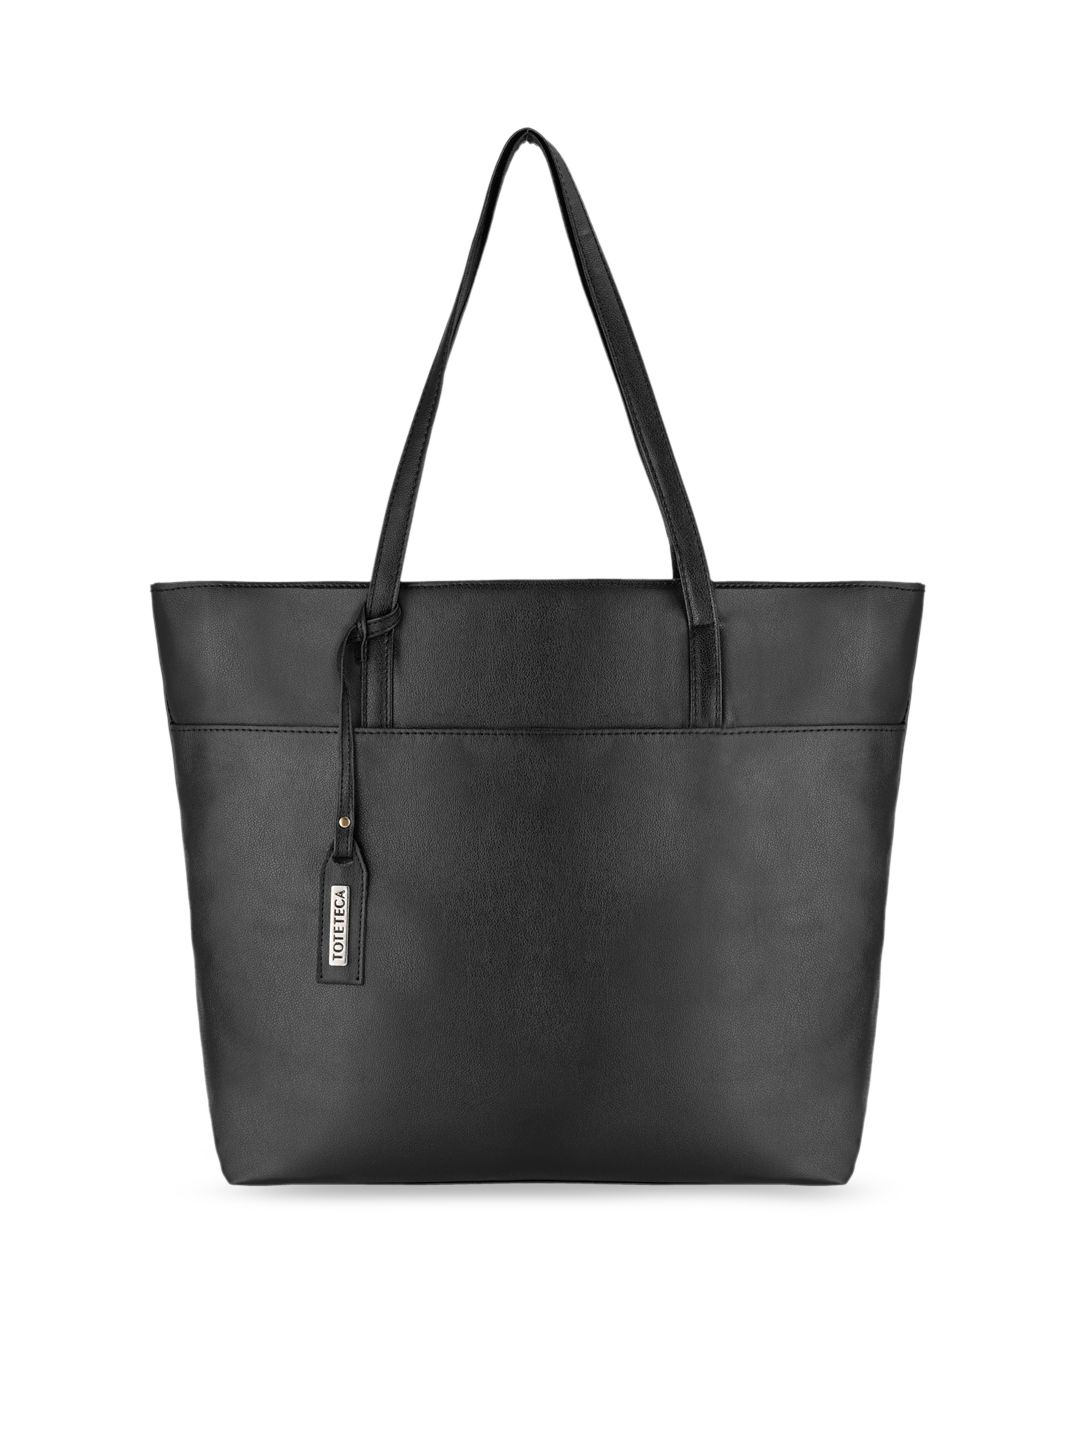 Toteteca Black PU Shopper Tote Bag with Tasselled Price in India